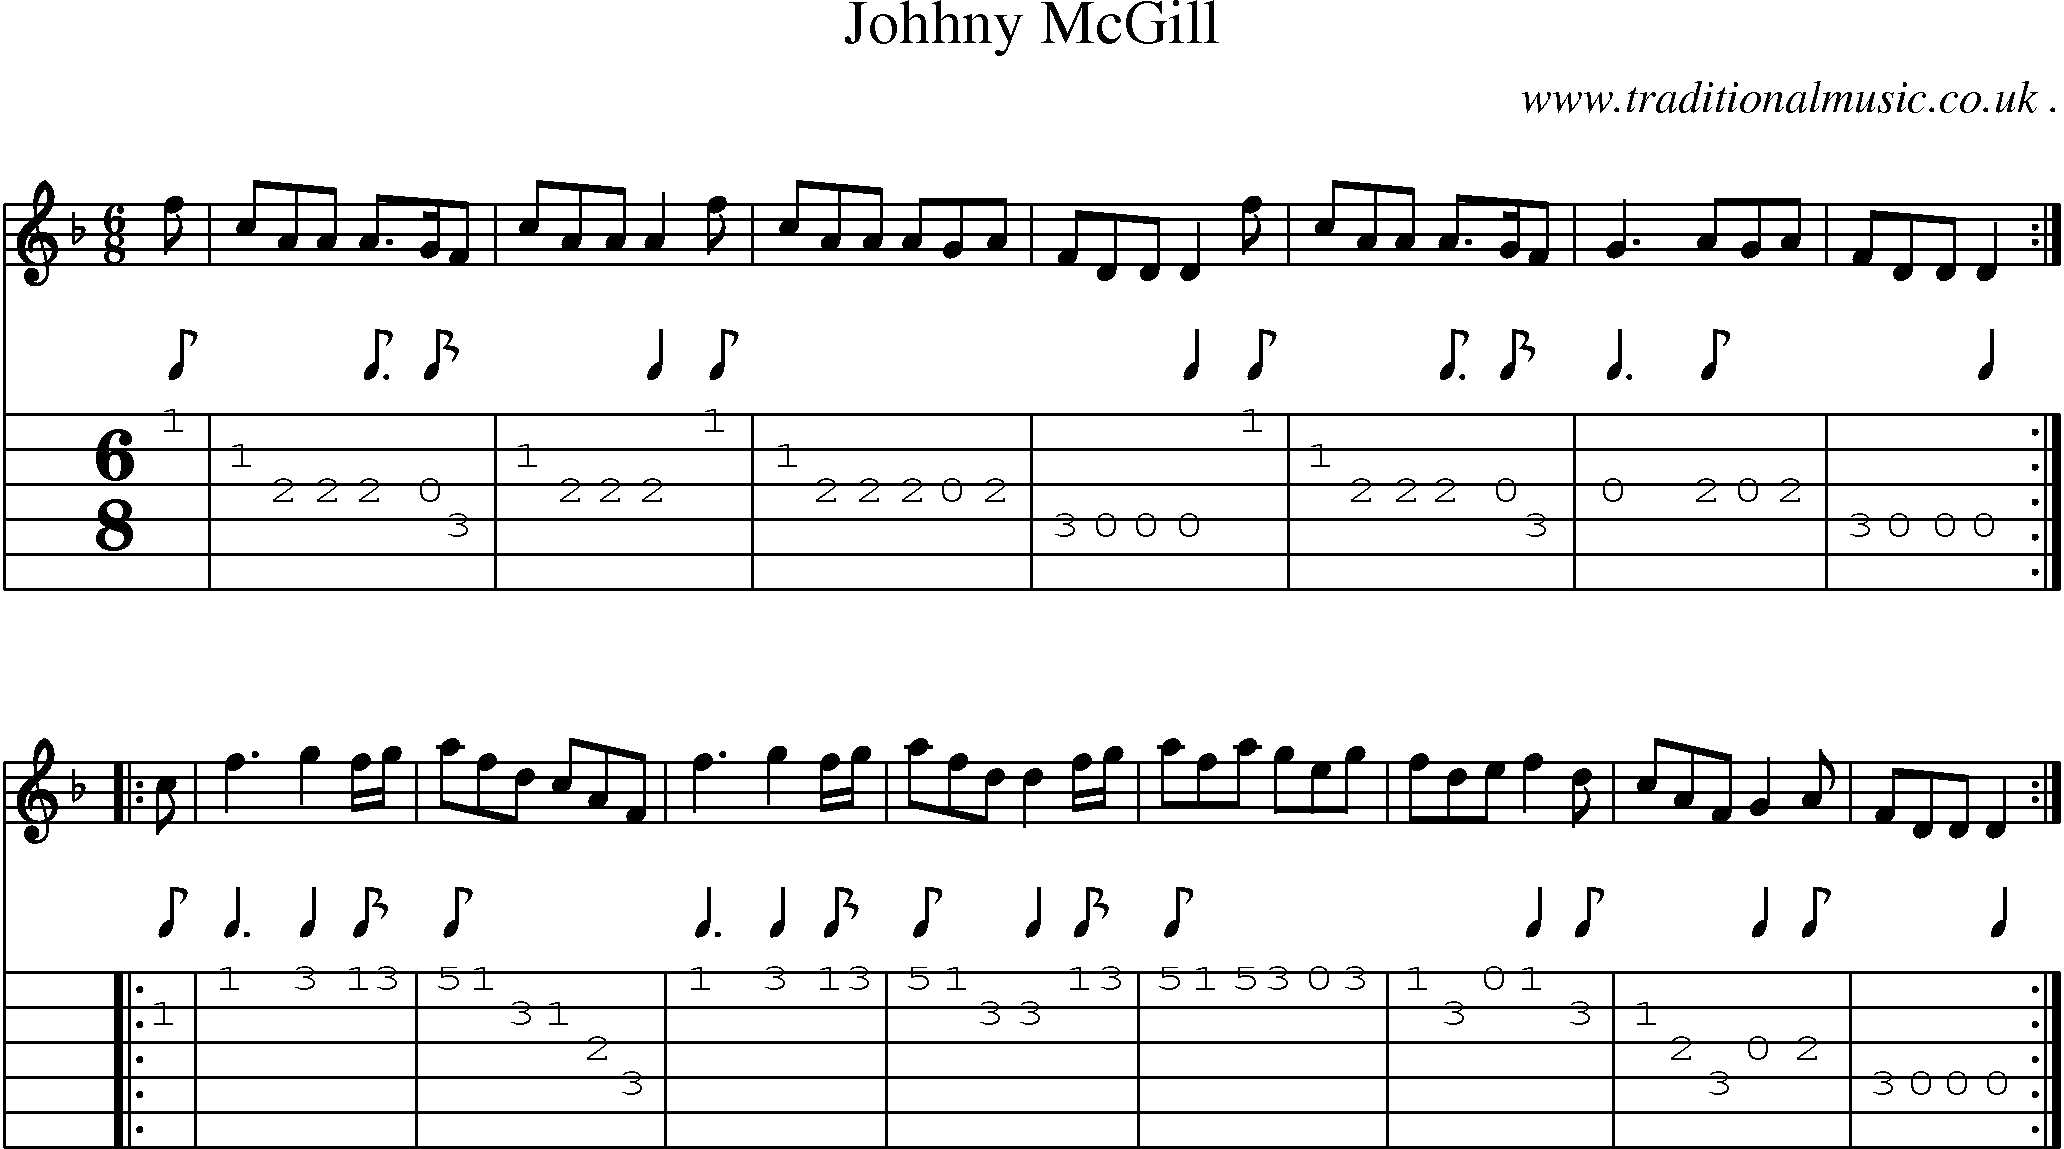 Sheet-Music and Guitar Tabs for Johhny Mcgill